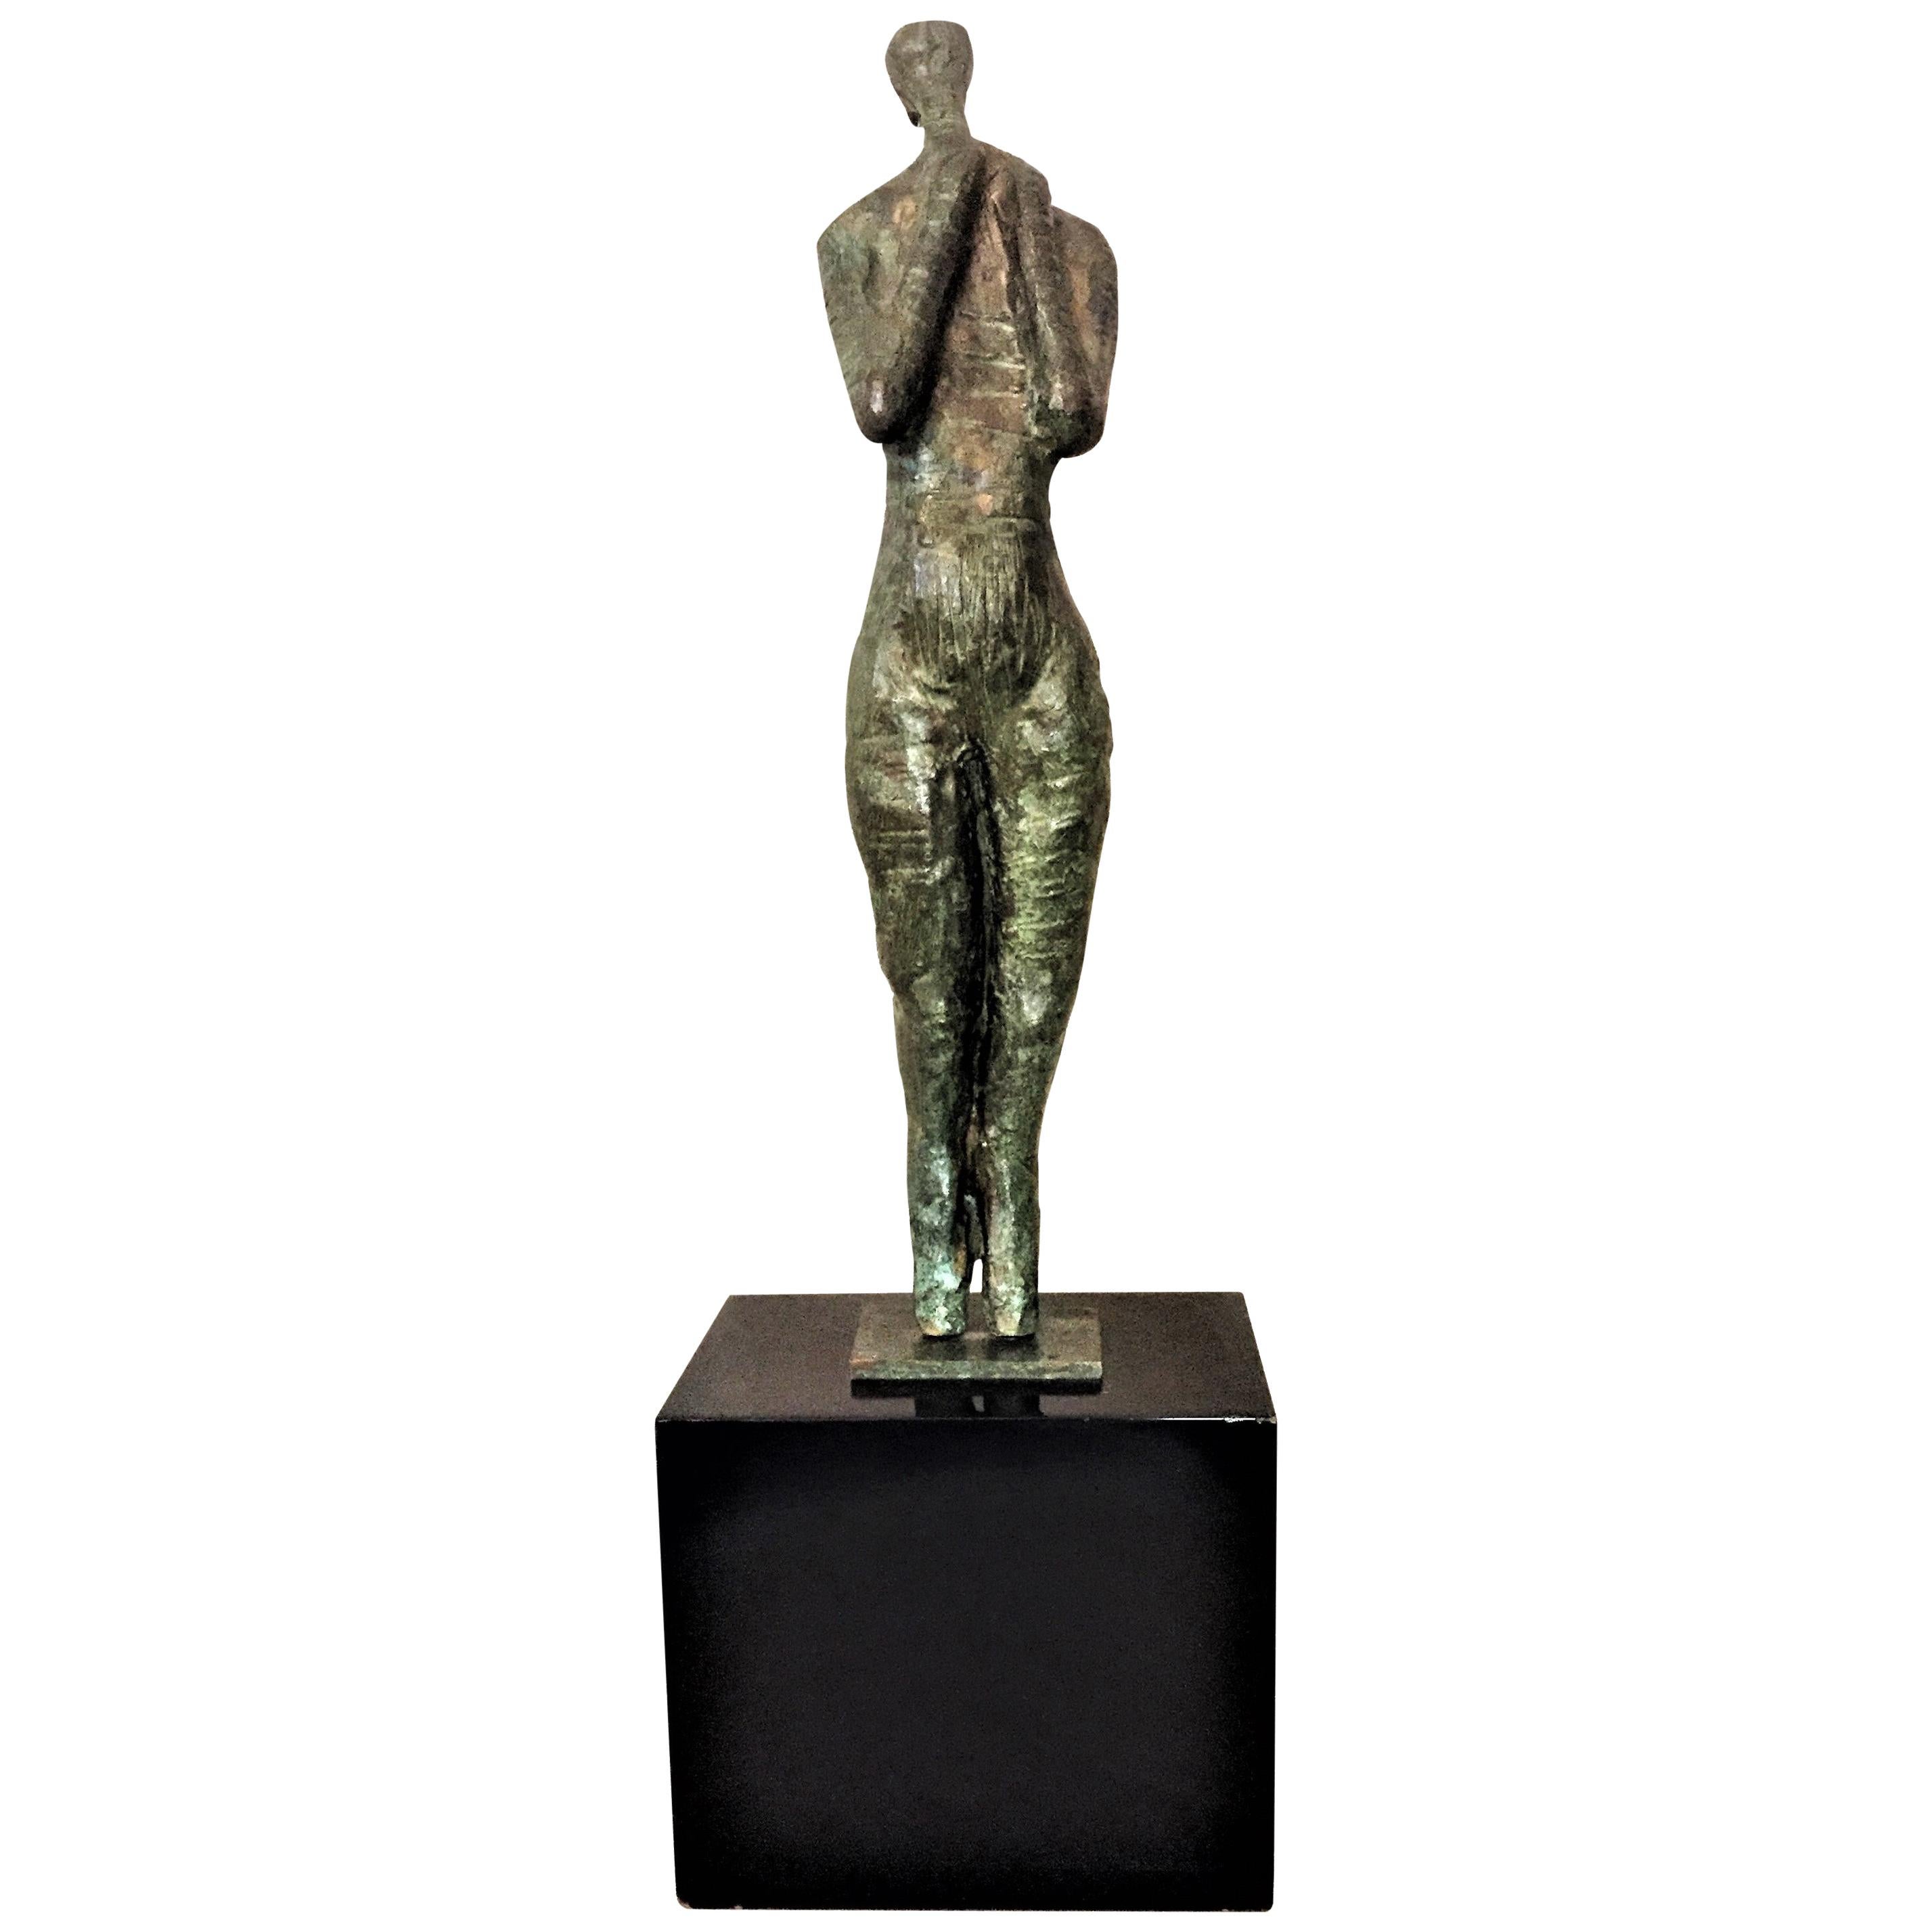 Shout, Mid-Century Modern Patinated Bronze Sculpture, Signed “Igor 67”